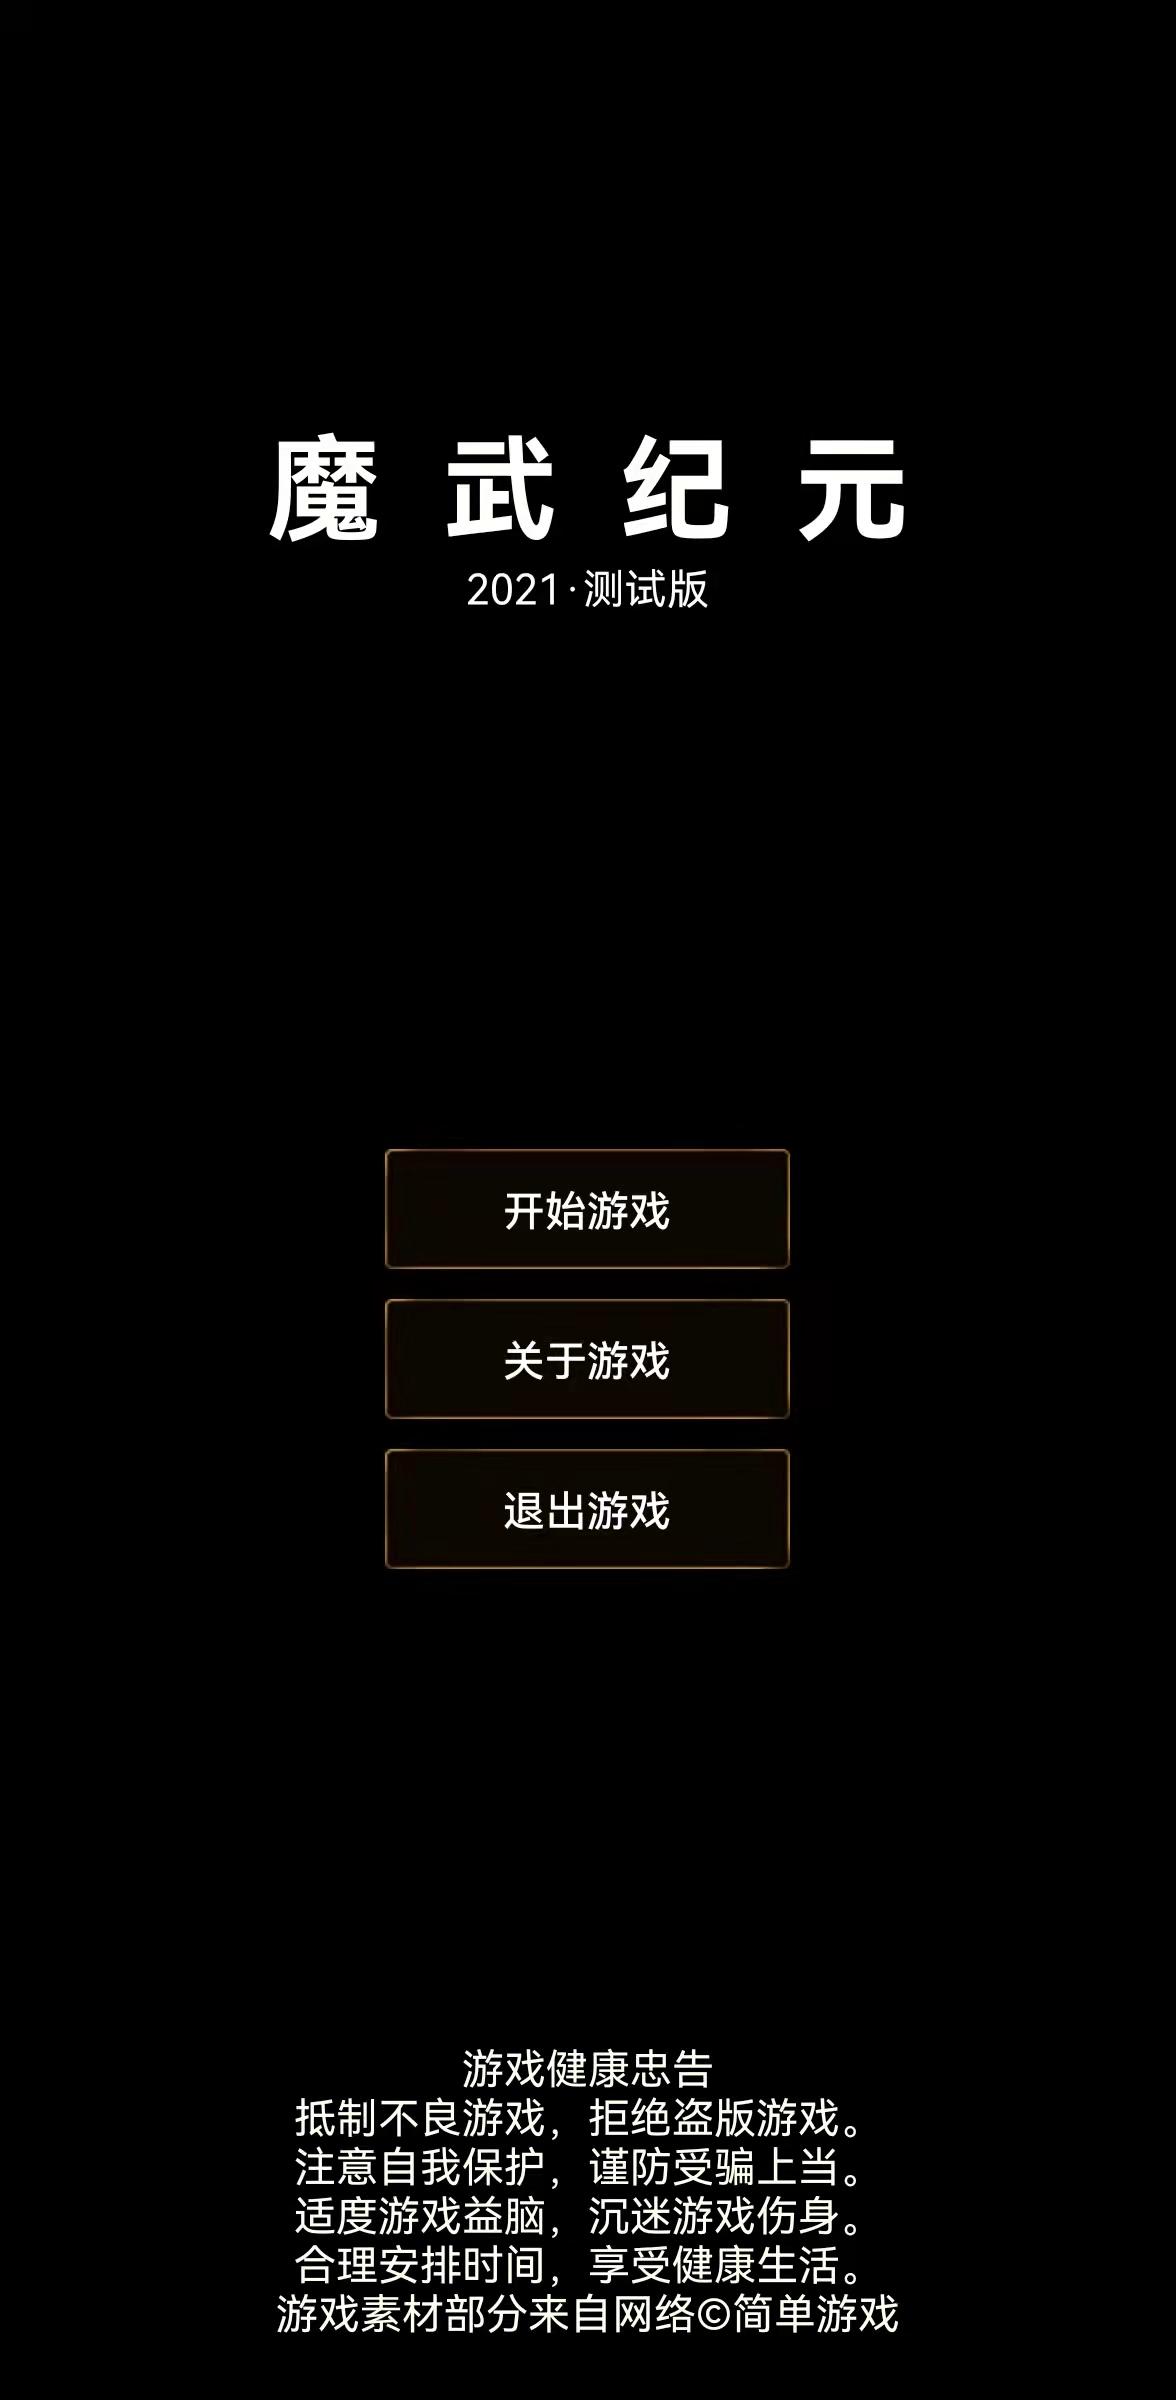 Screenshot 1 of Mo Wu: Eterno 23.9.20